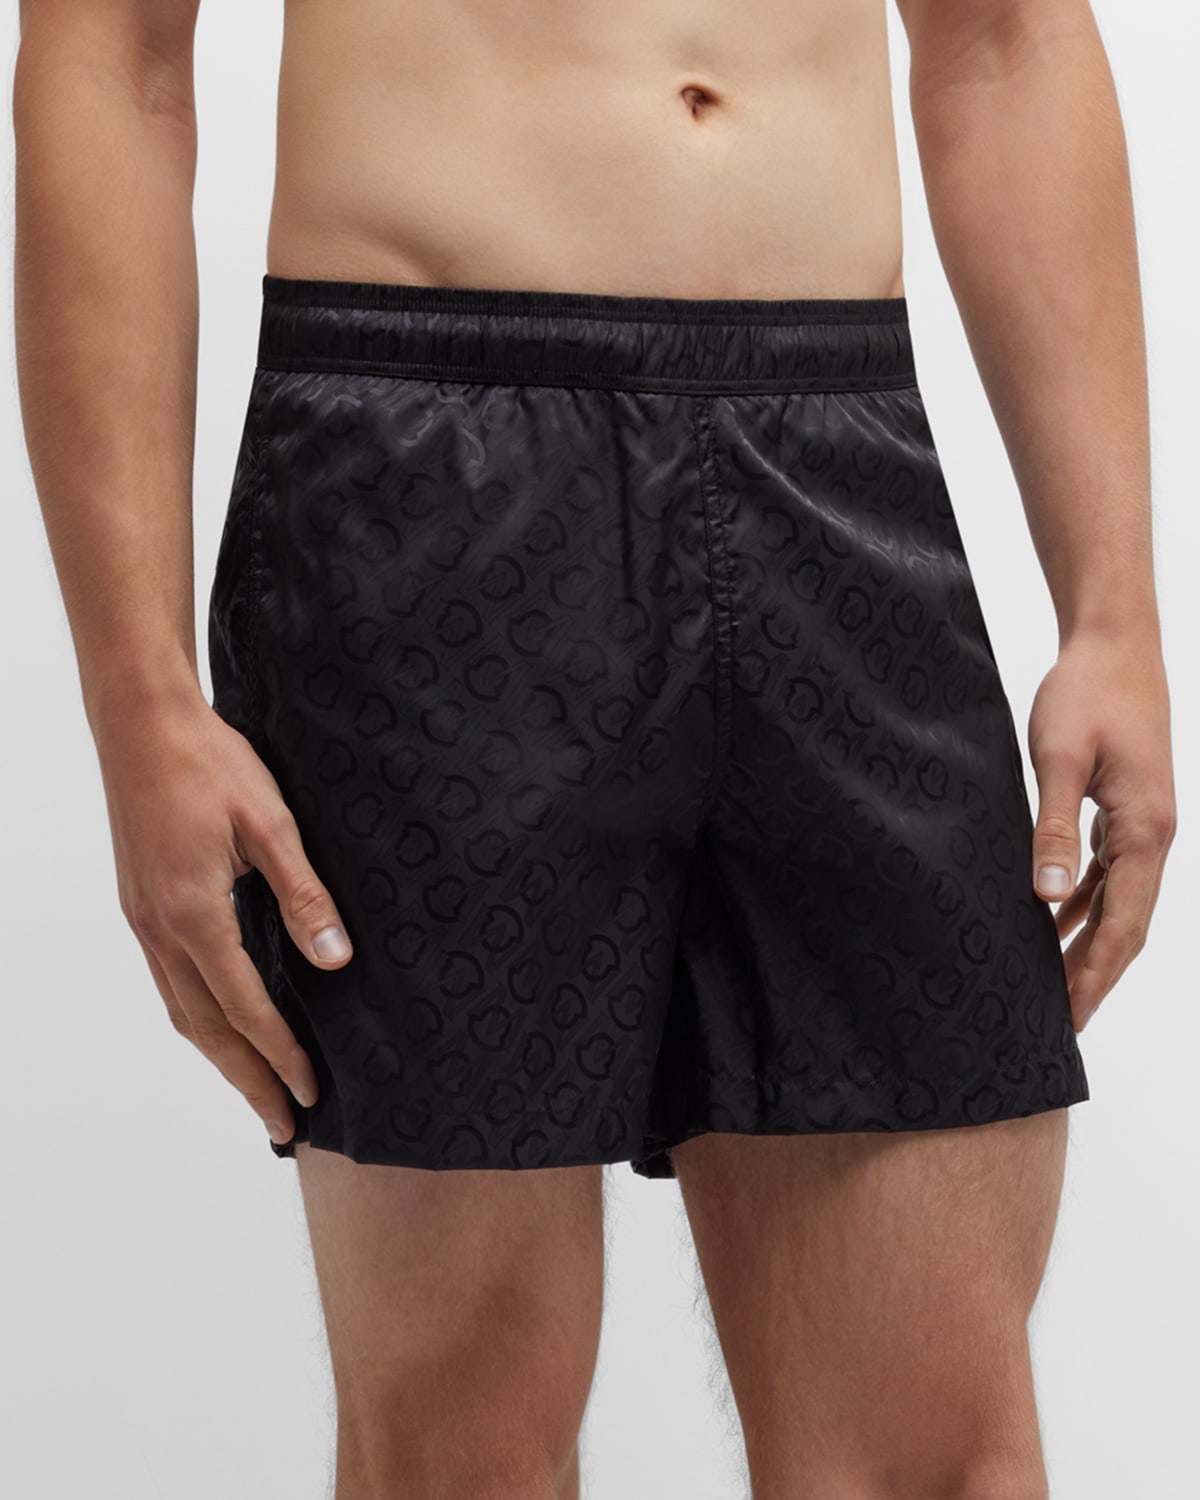 GG jacquard nylon swim shorts in black